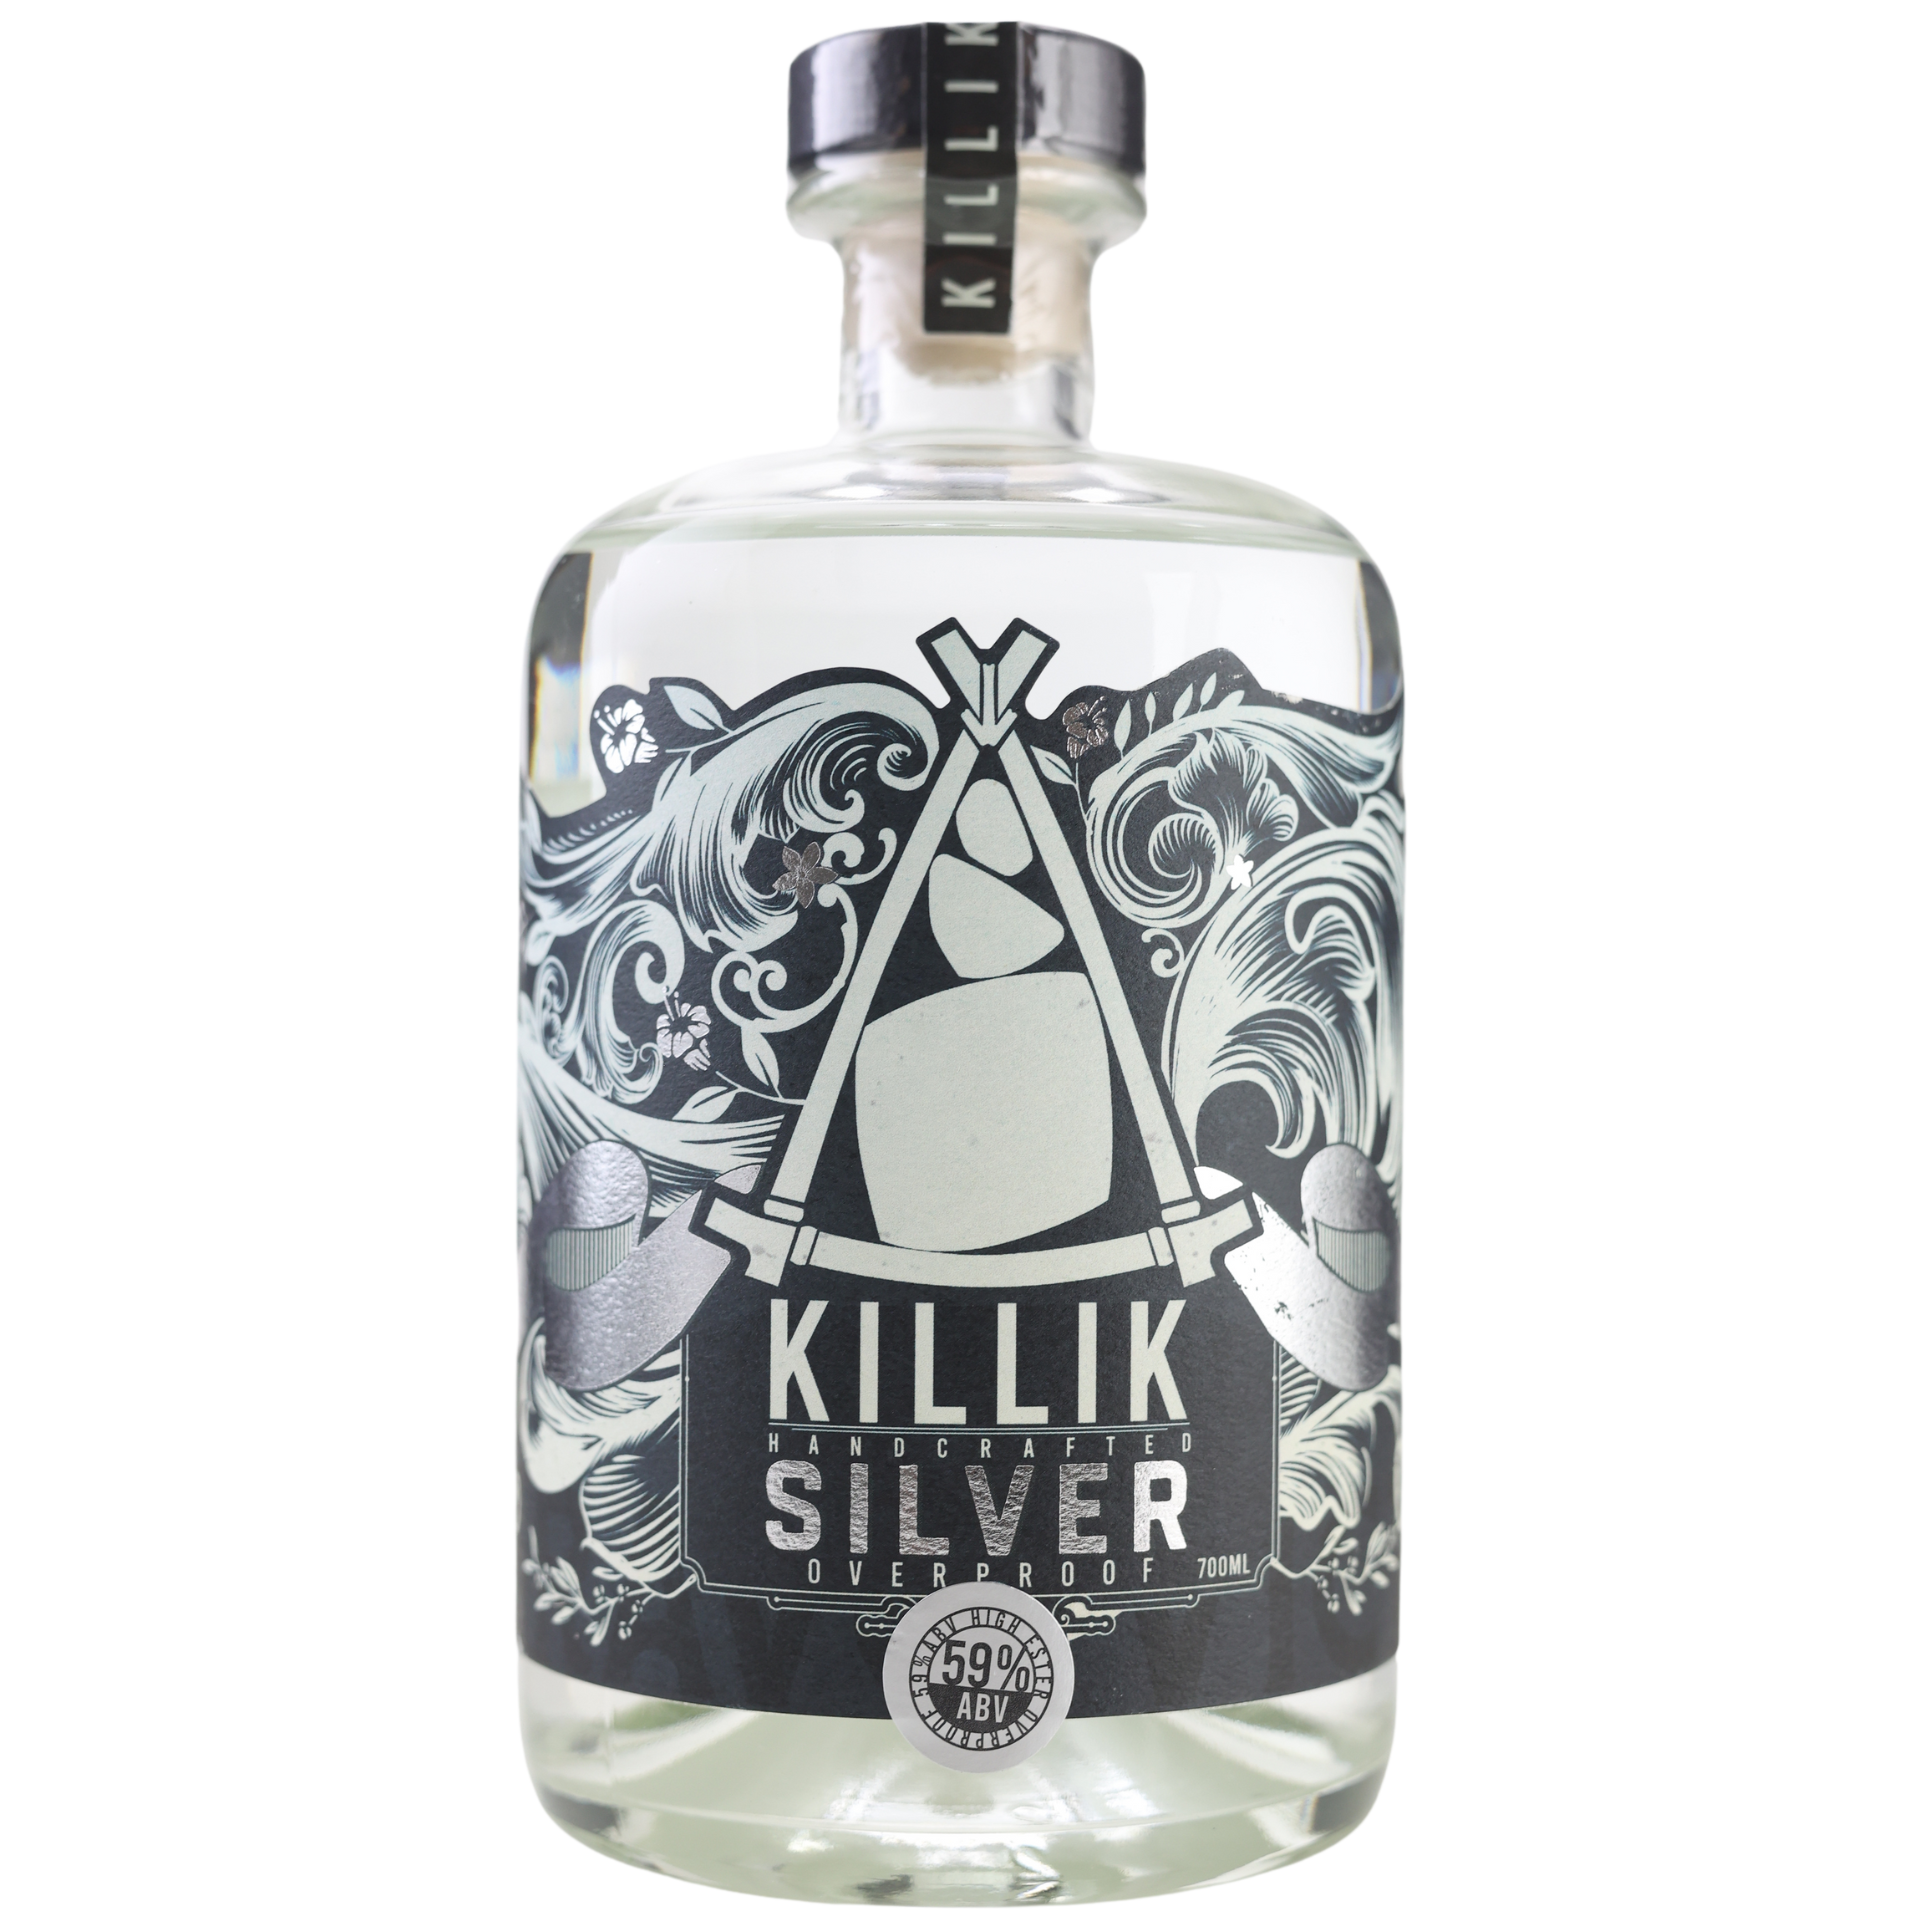 Killik Silver Over Proof Rum 59% 0,7l